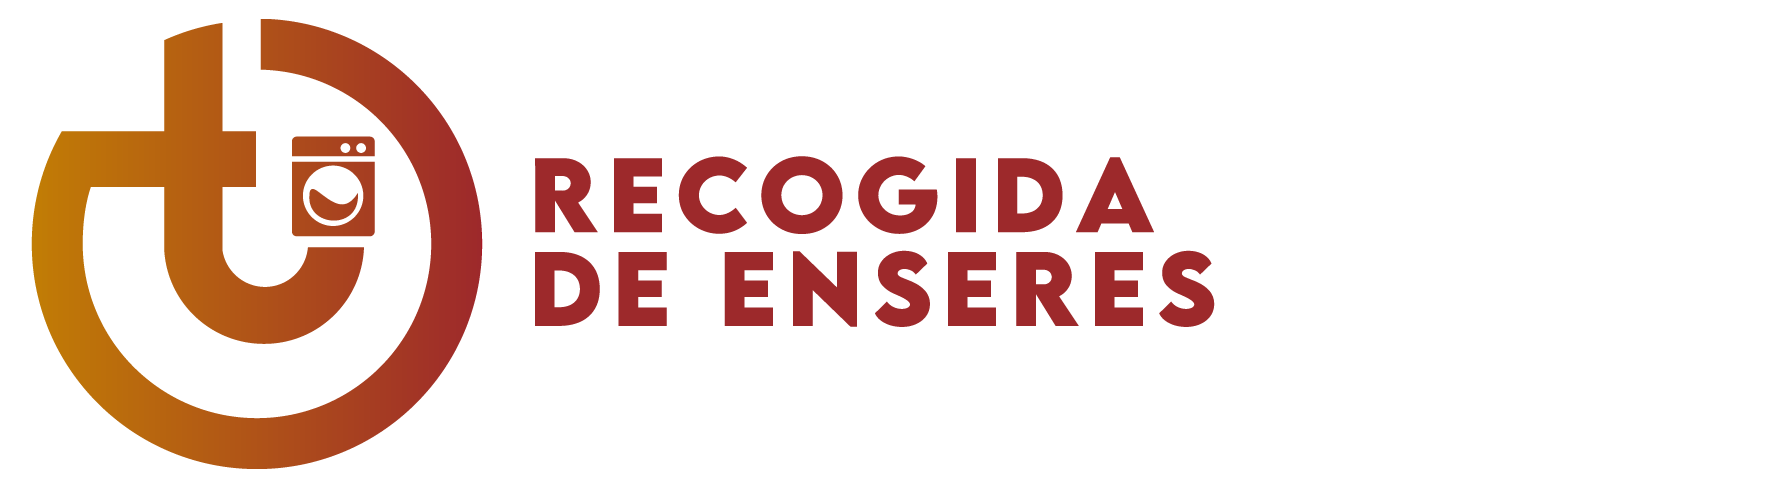 RECOGIDA ENSERES logo